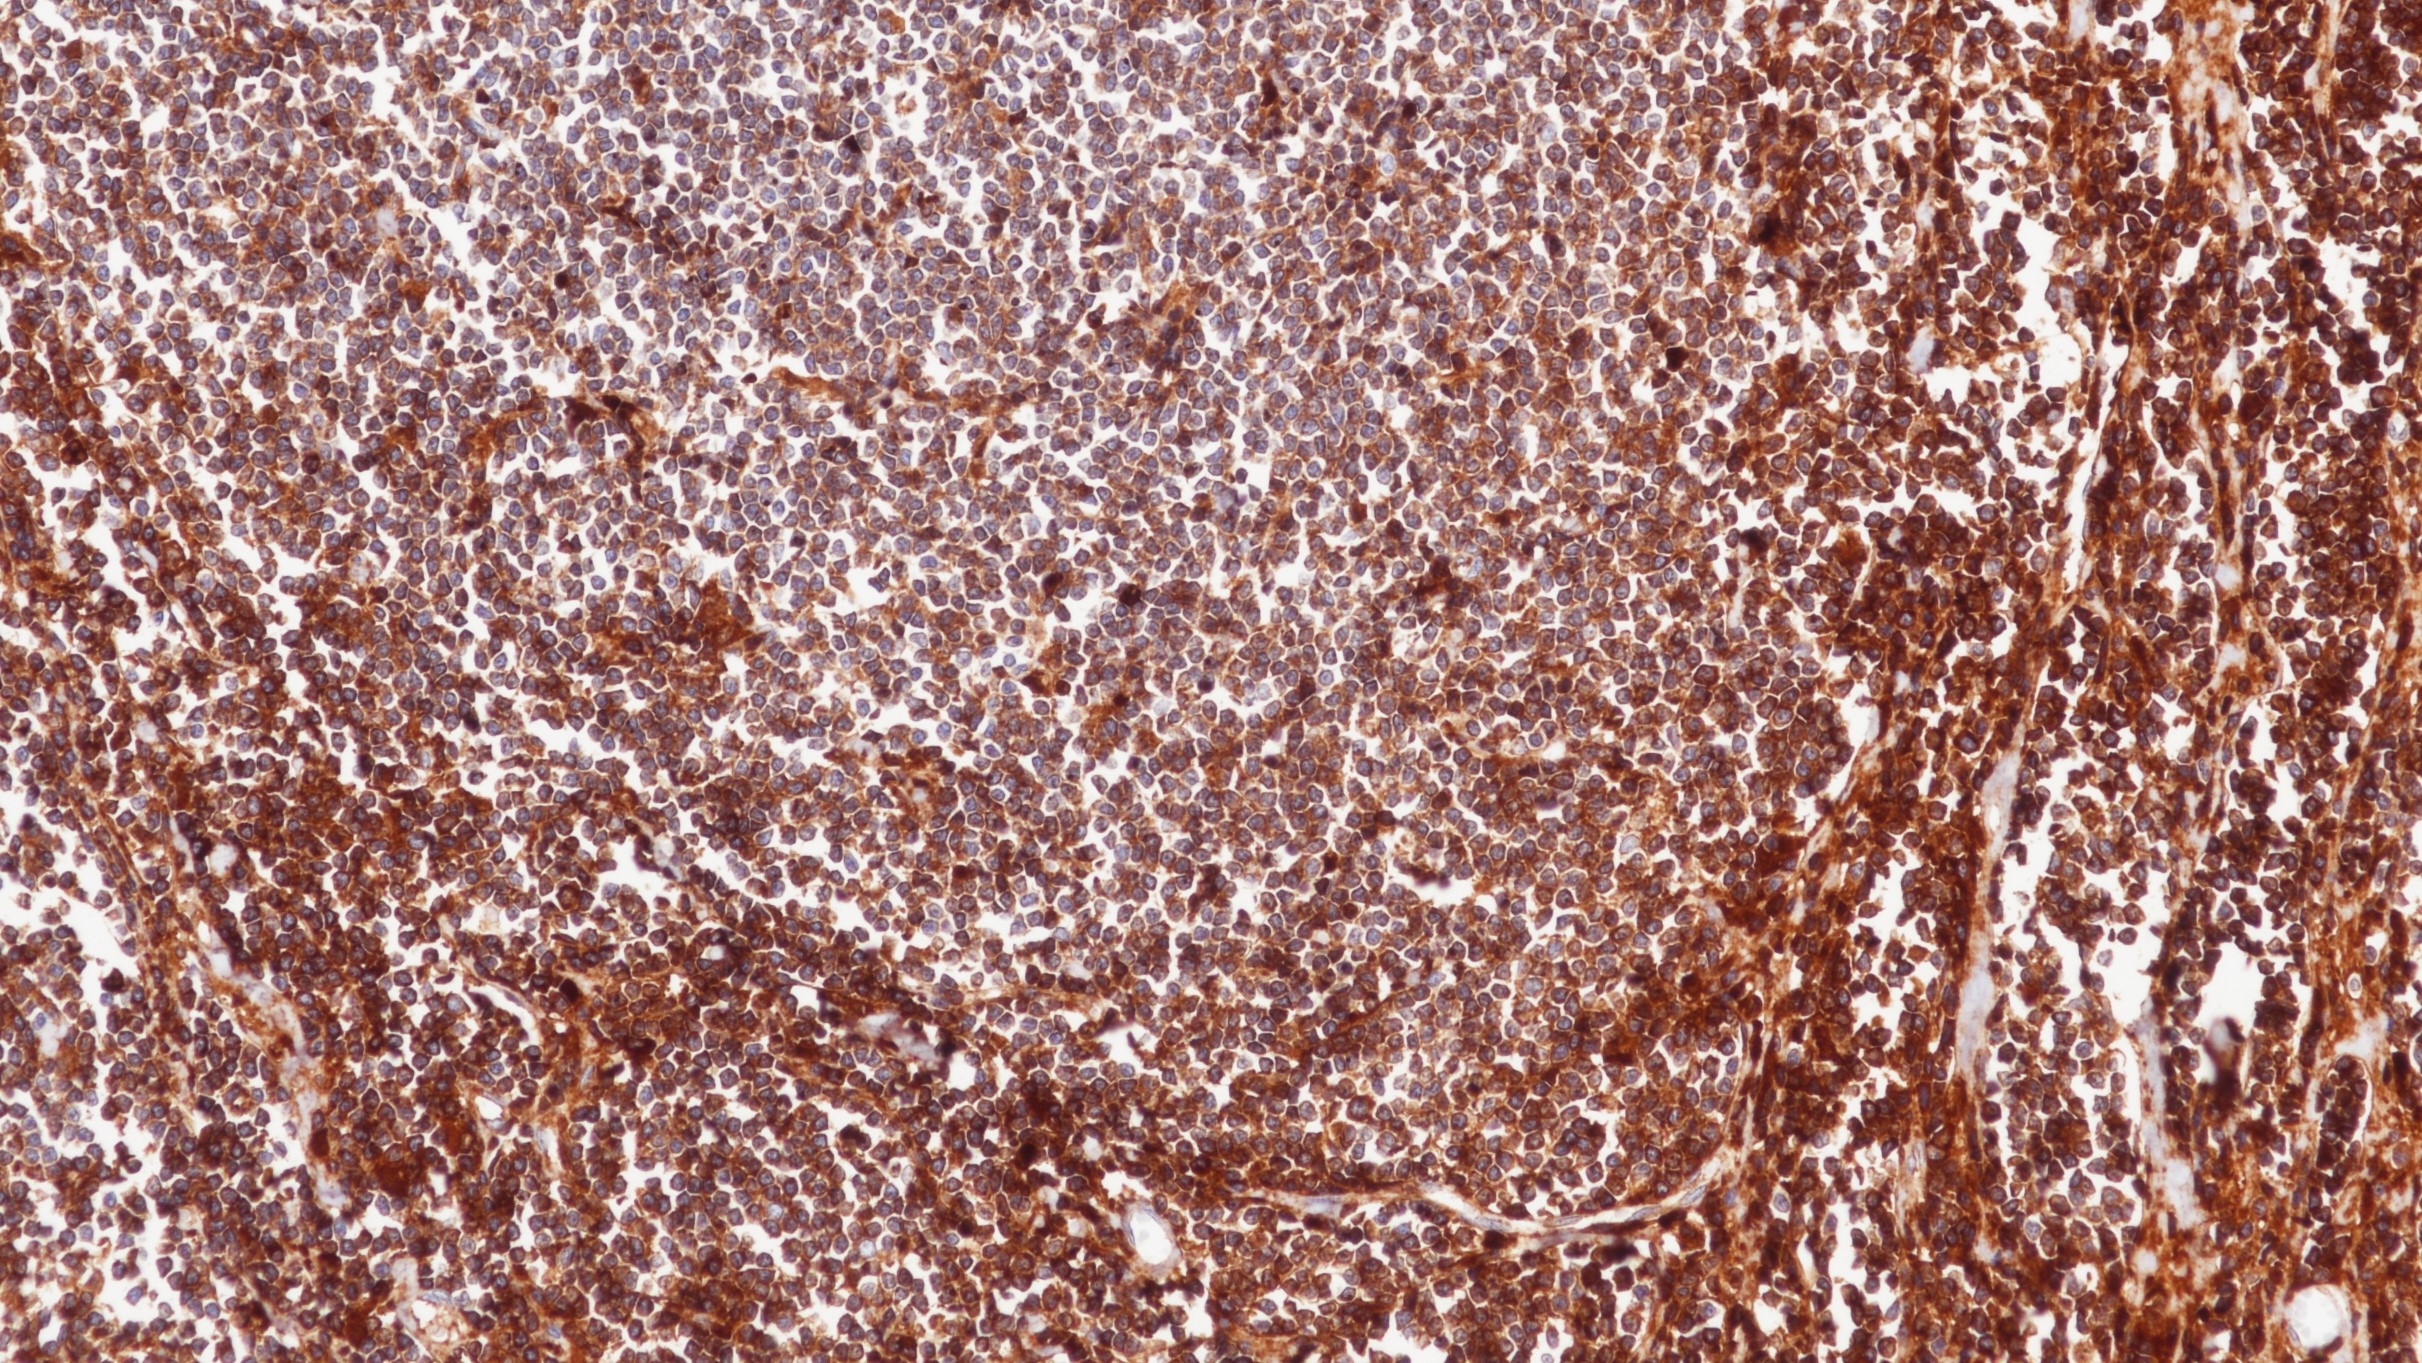 B细胞淋巴瘤Kappa(L1C1)染色